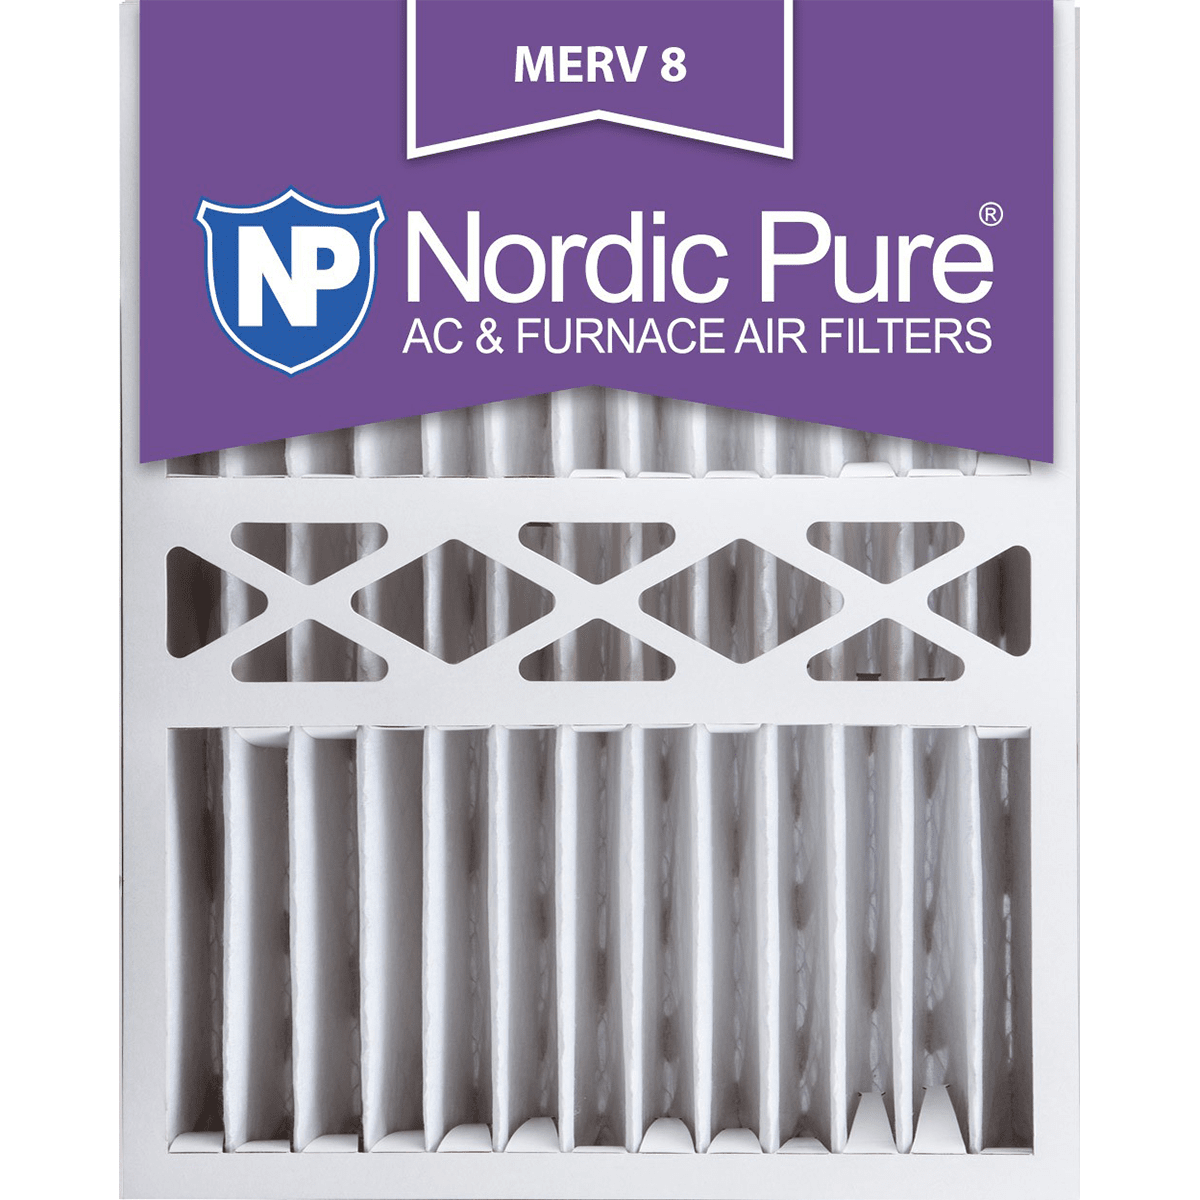 Nordic Pure Merv 8 Pleated Furnace Filter 16x20x5 (16x20x5hm8-1)